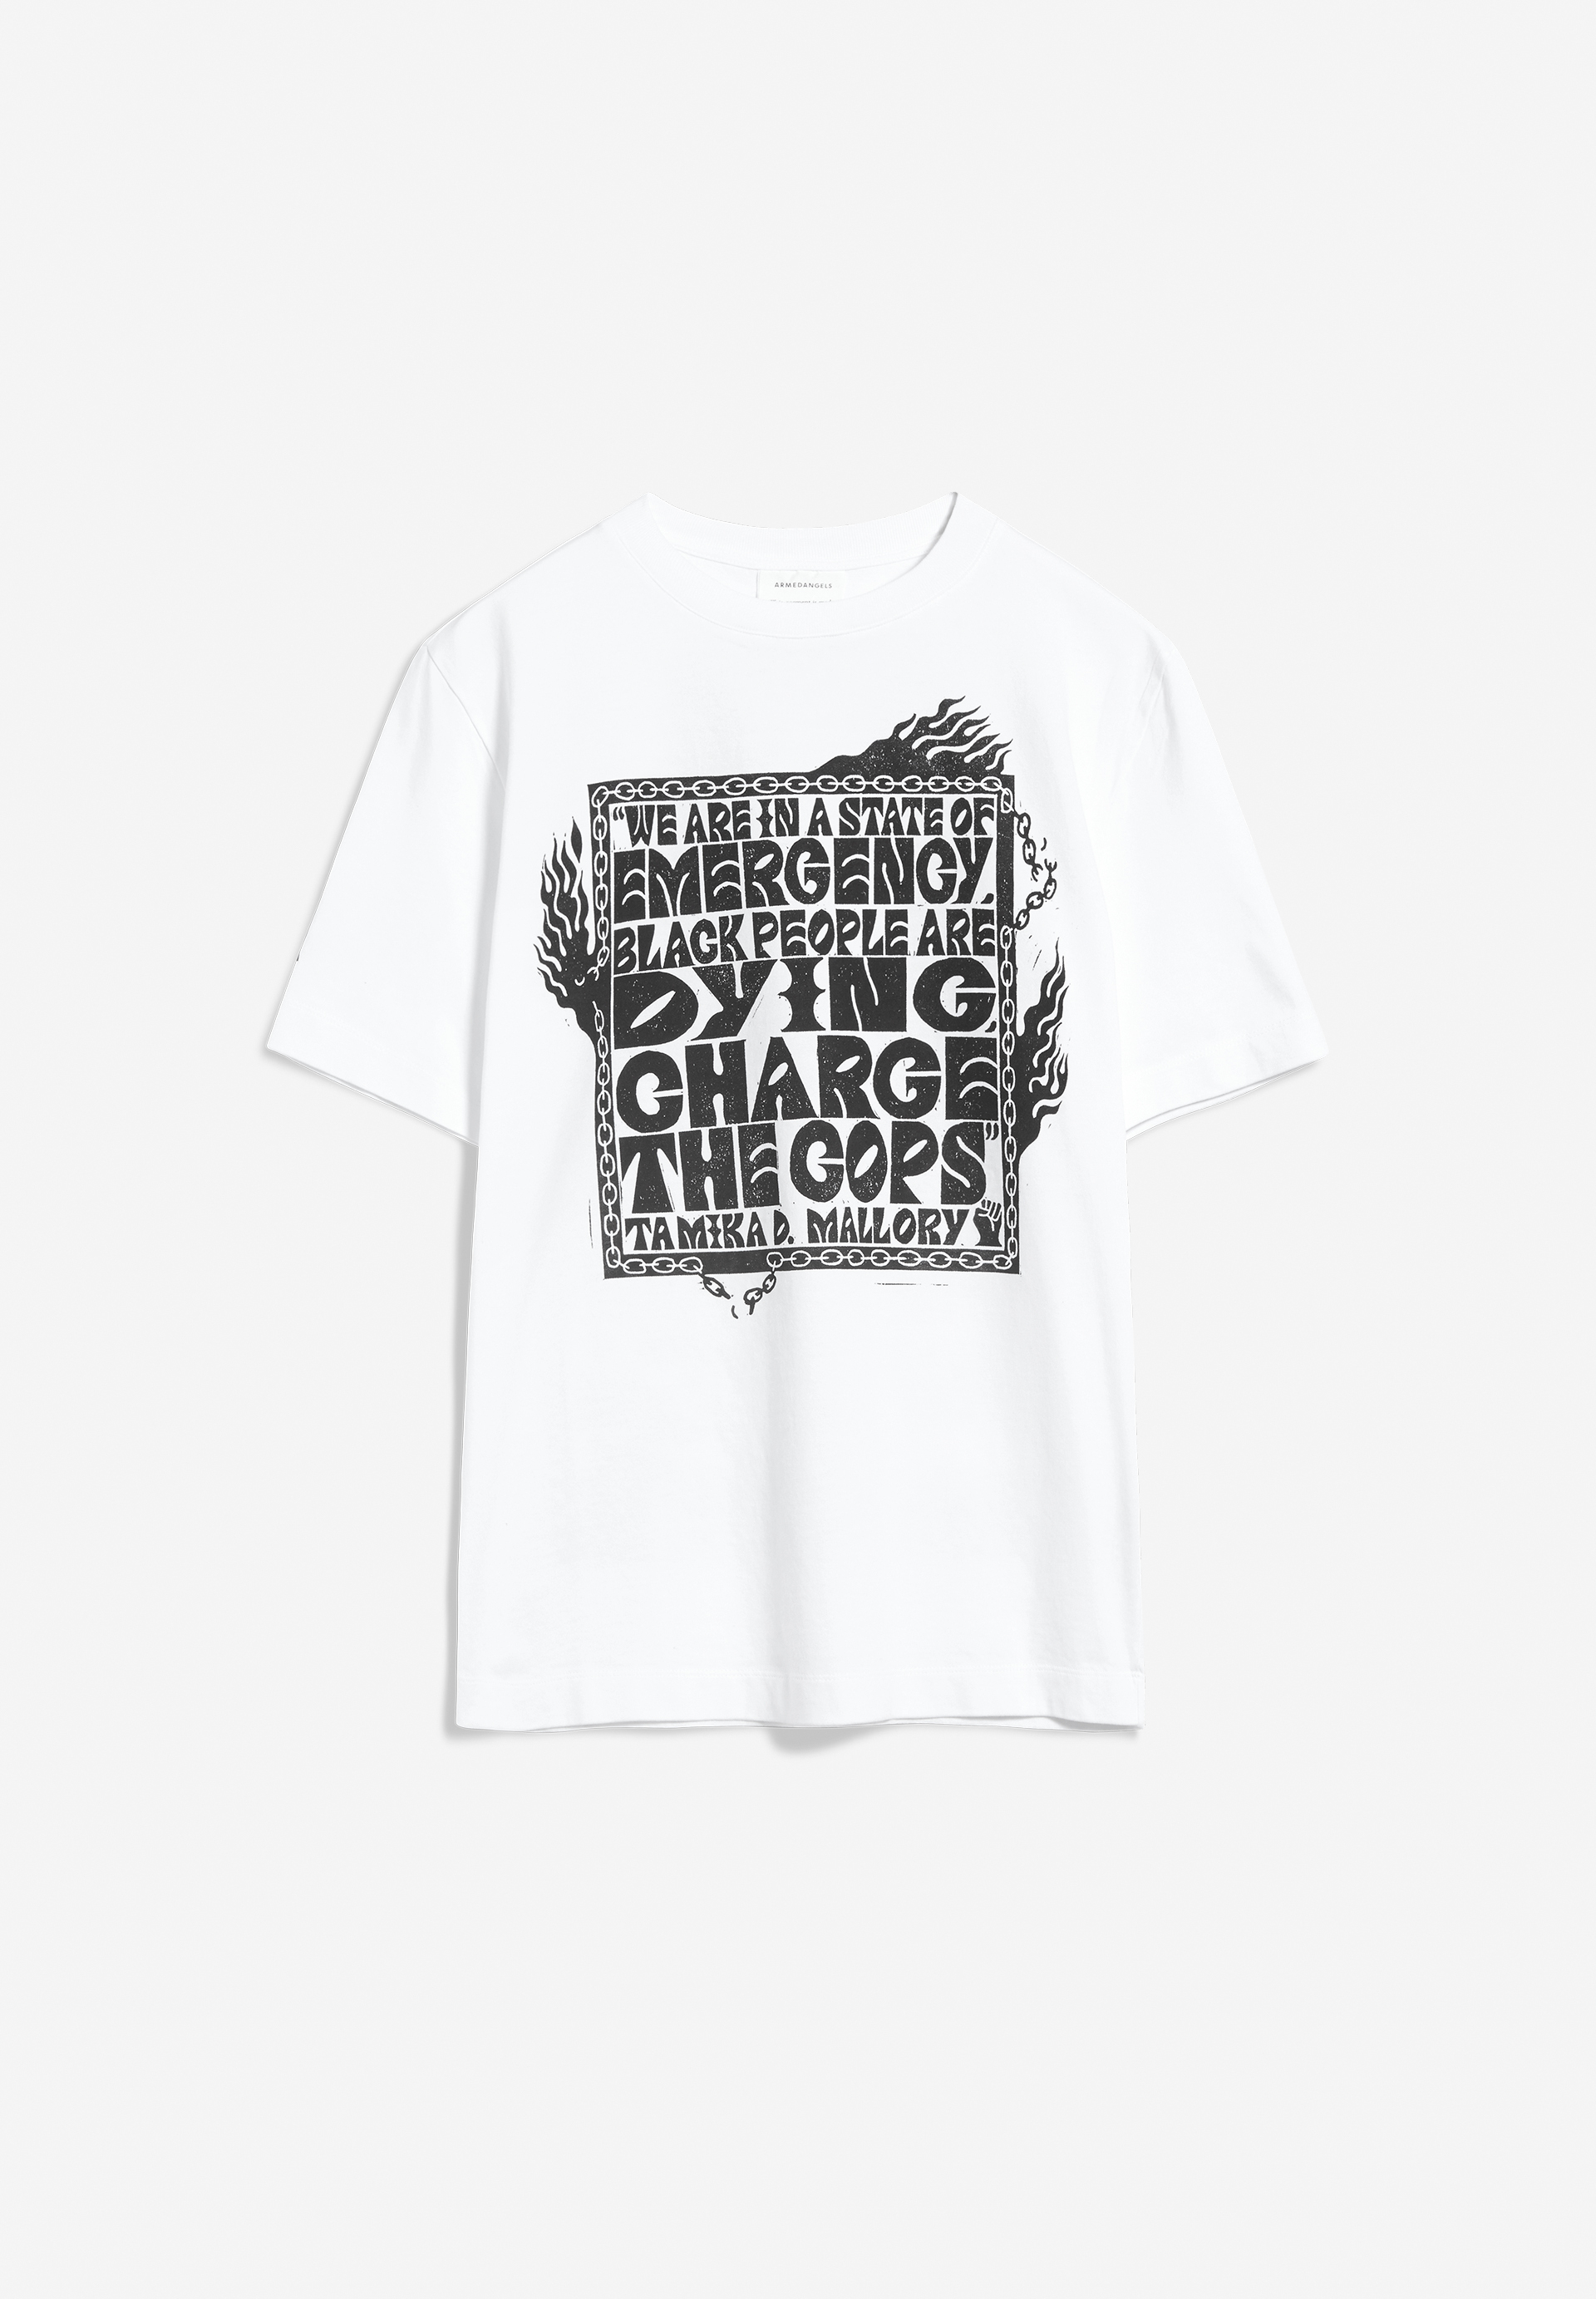 TARAA SOLIDARITY 02 T-Shirt made of organic cotton (womens fit)